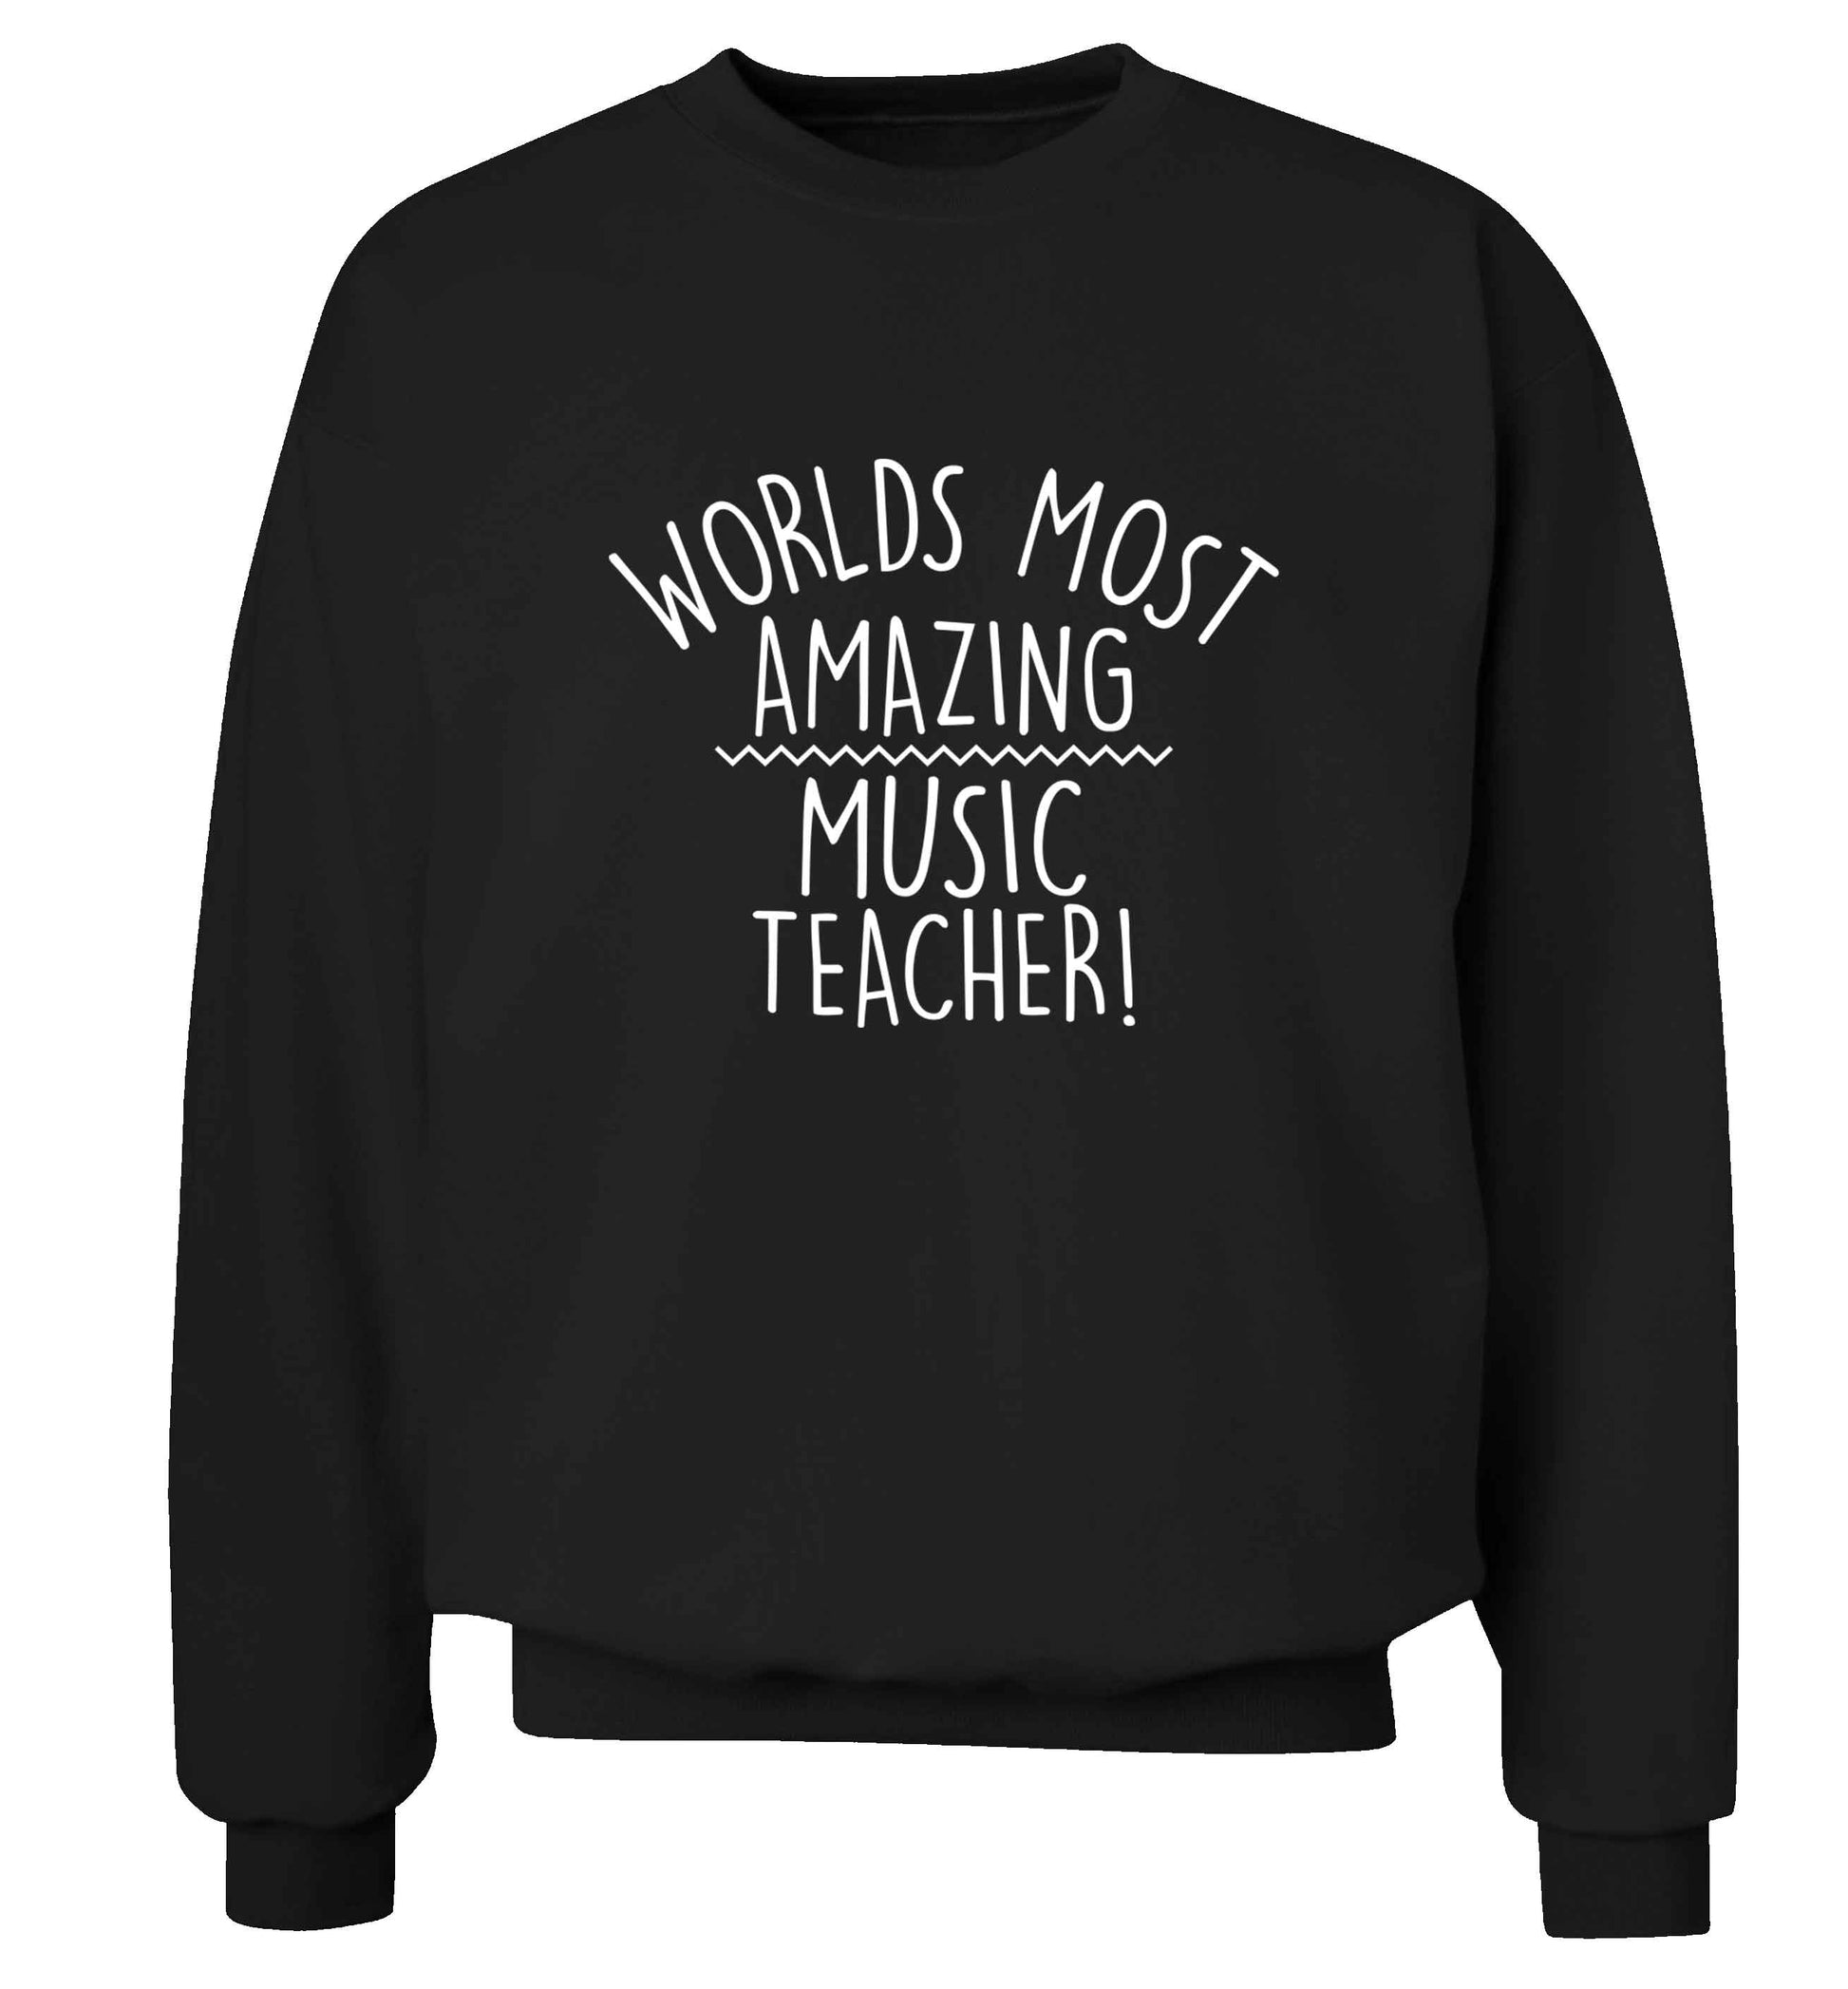 Worlds most amazing music teacher adult's unisex black sweater 2XL